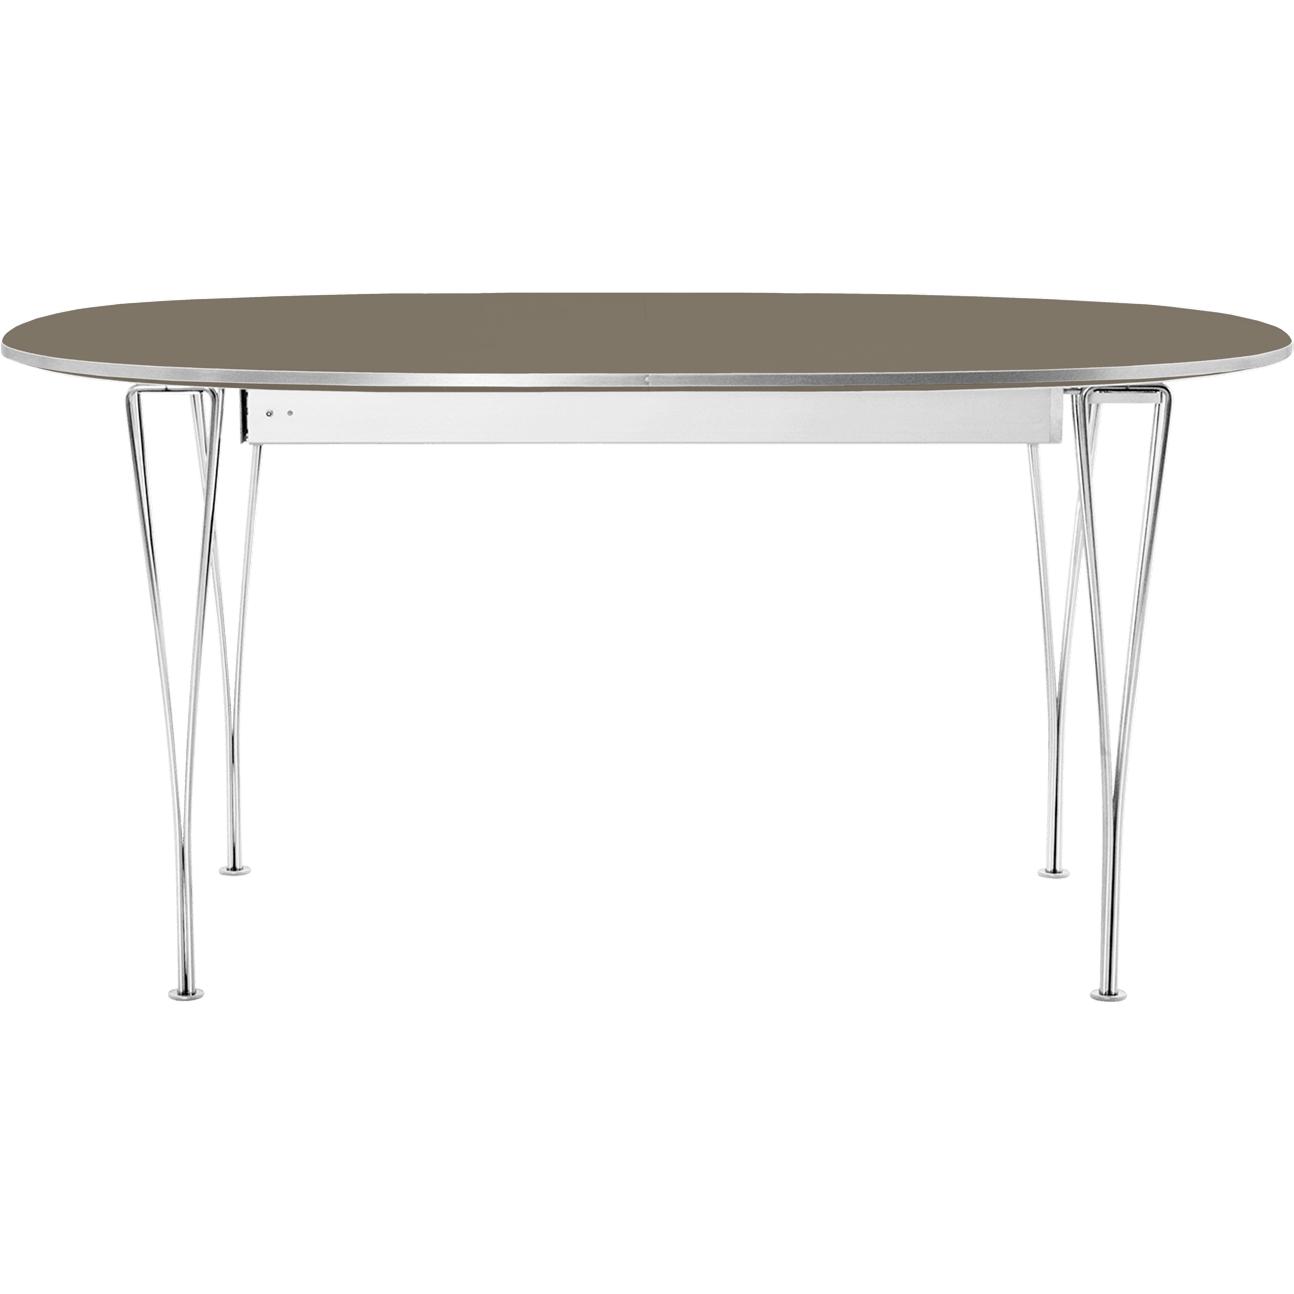 Fritz Hansen Super-Ollipse Pull-Out Table Chromed 100x170/270 cm, Brown Ottawa Laminate